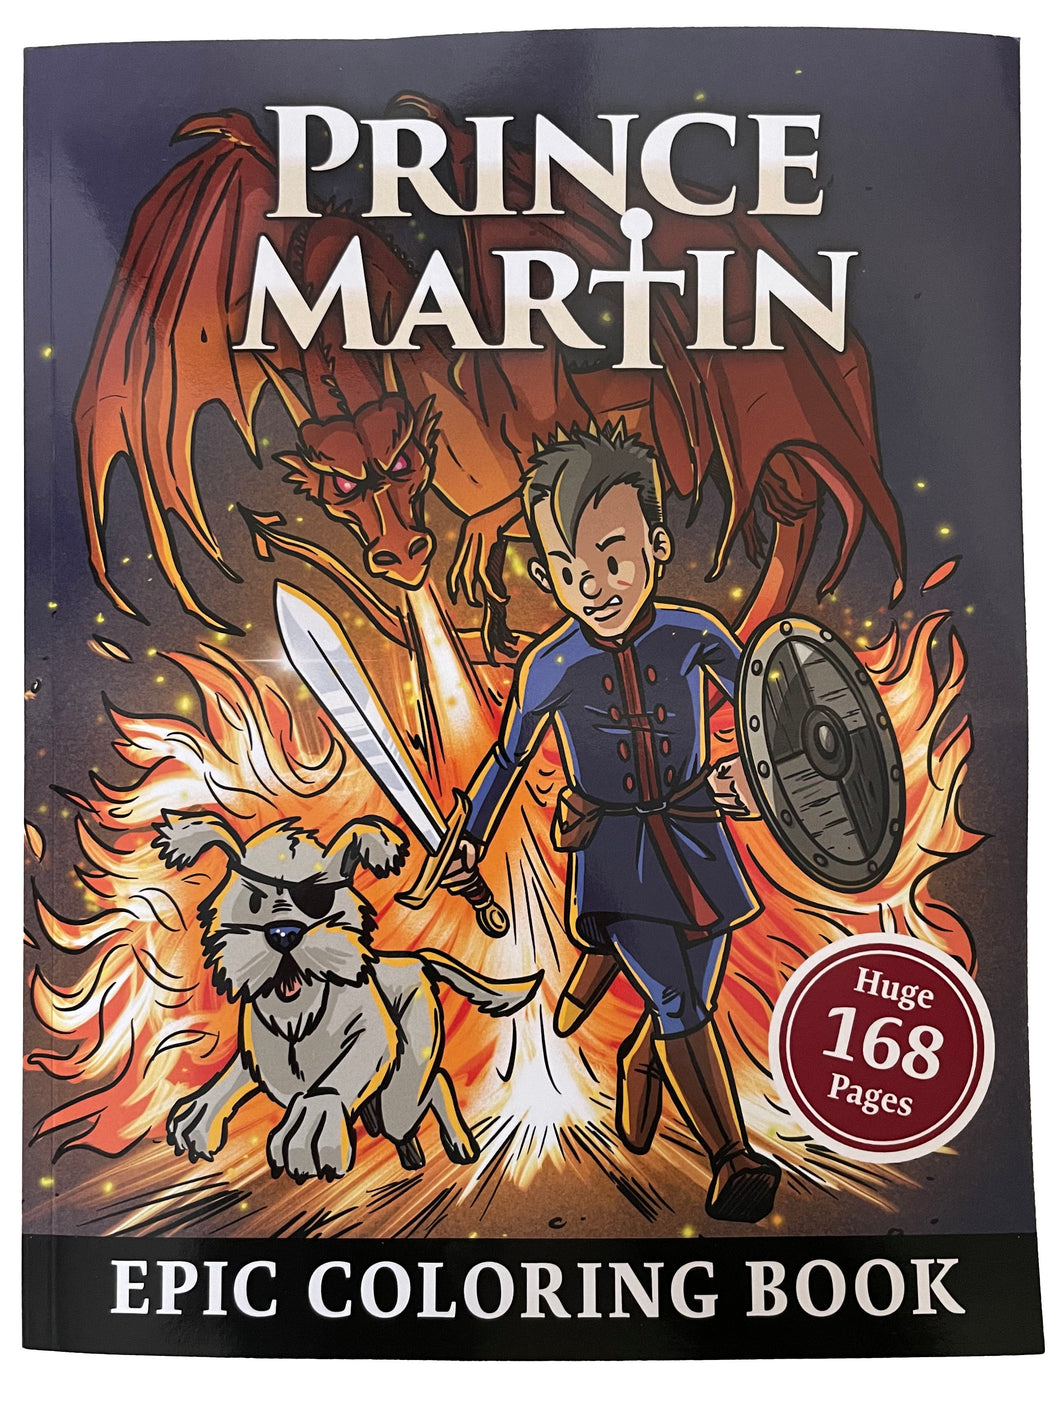 Prince Martin Epic Coloring Book